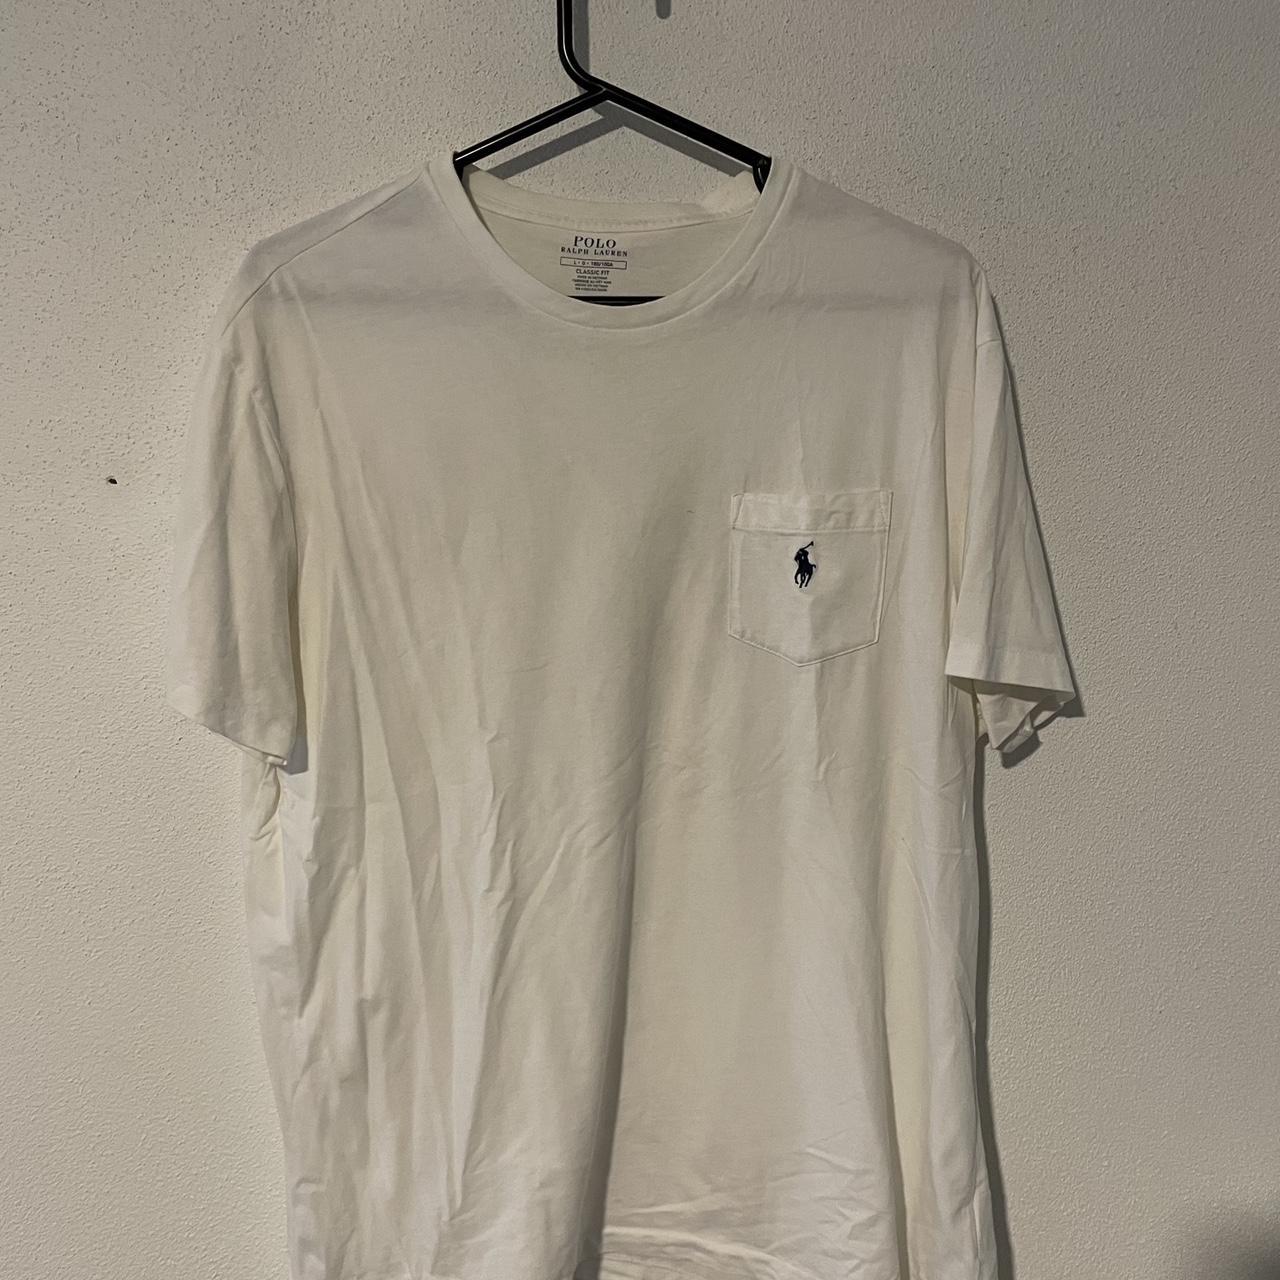 White Polo Ralph Lauren pocket t-shirt ⭐️ size Large... - Depop